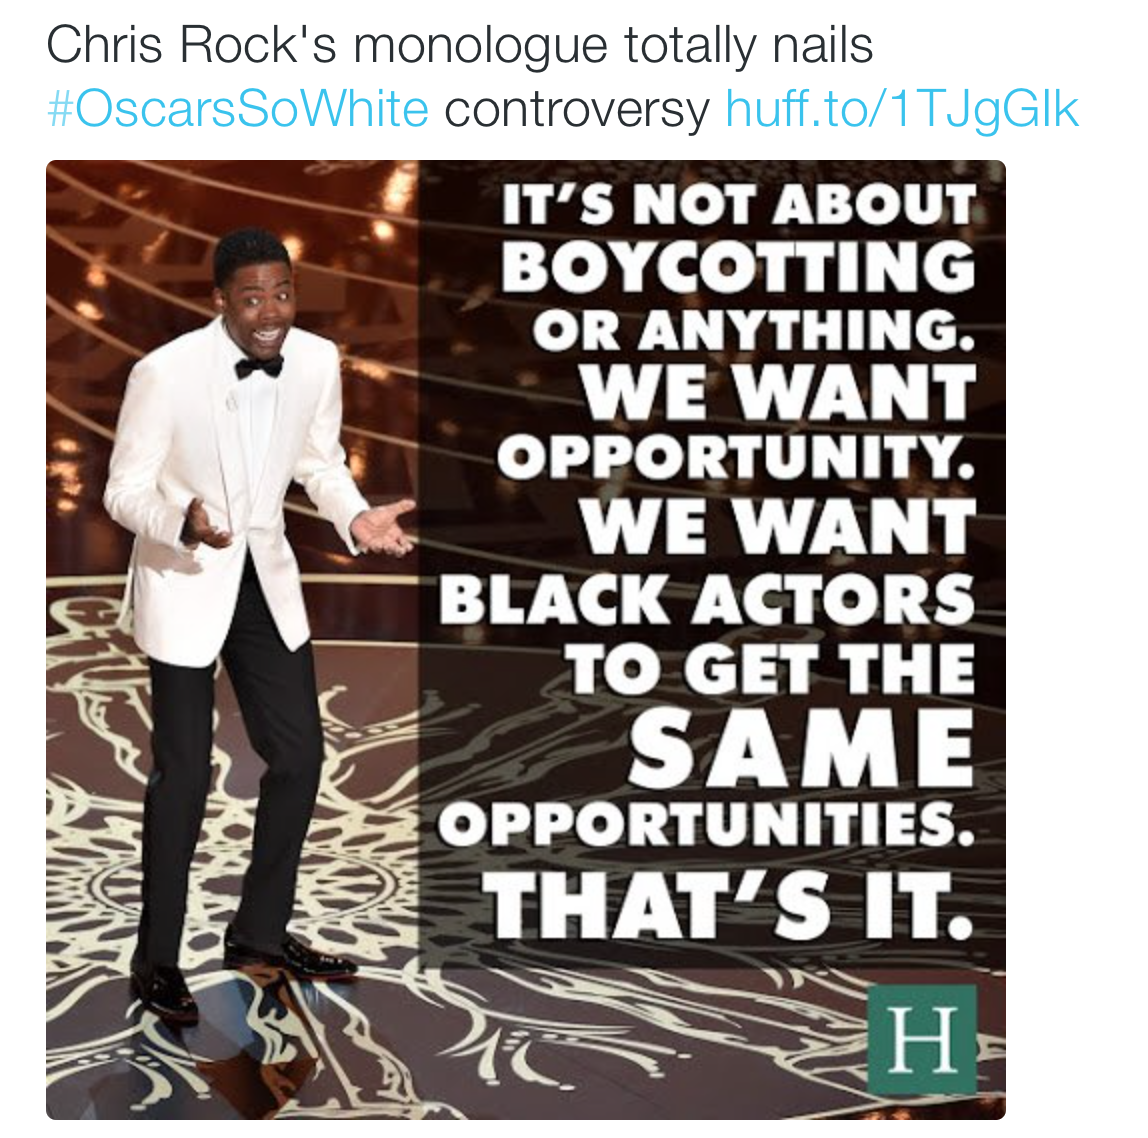 Chris Rock #OscarsSoWhite monologue